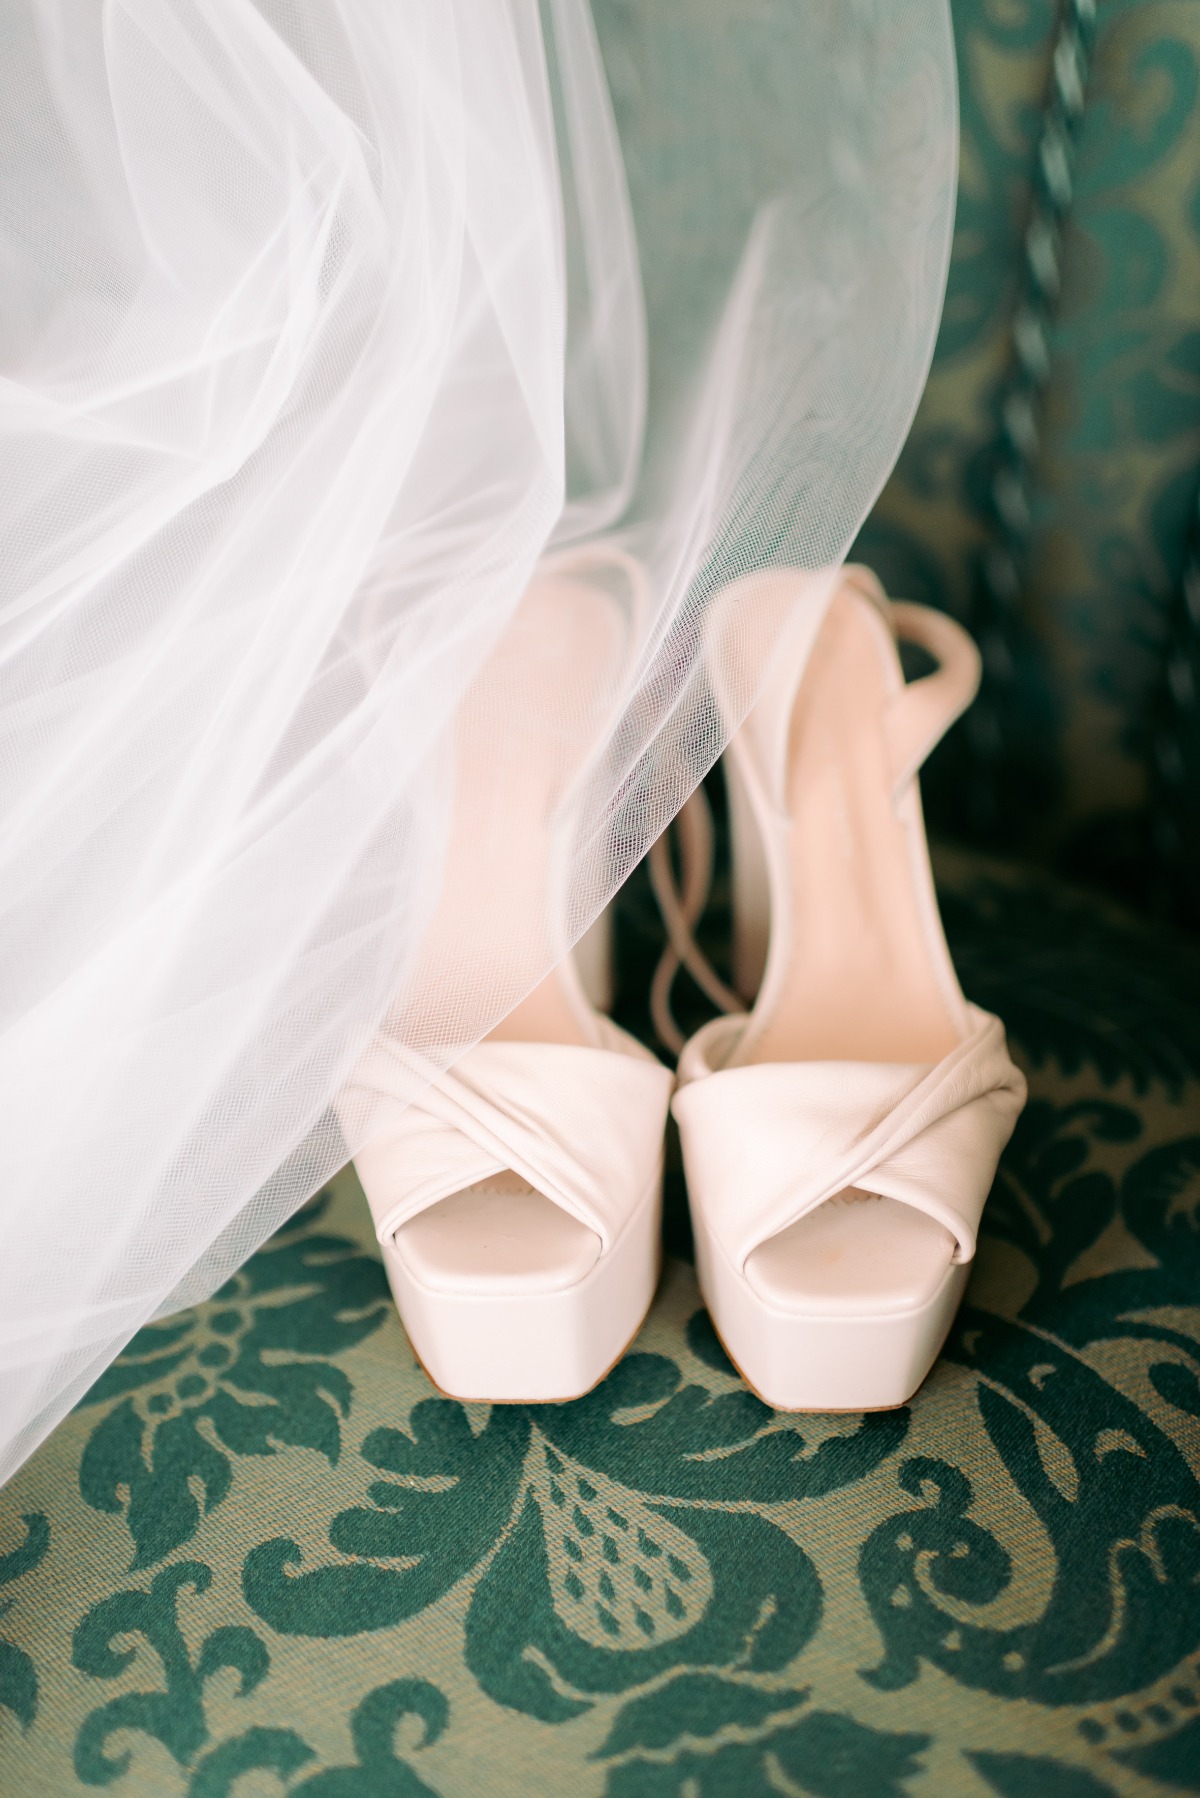 Vera Wang wedding shoes